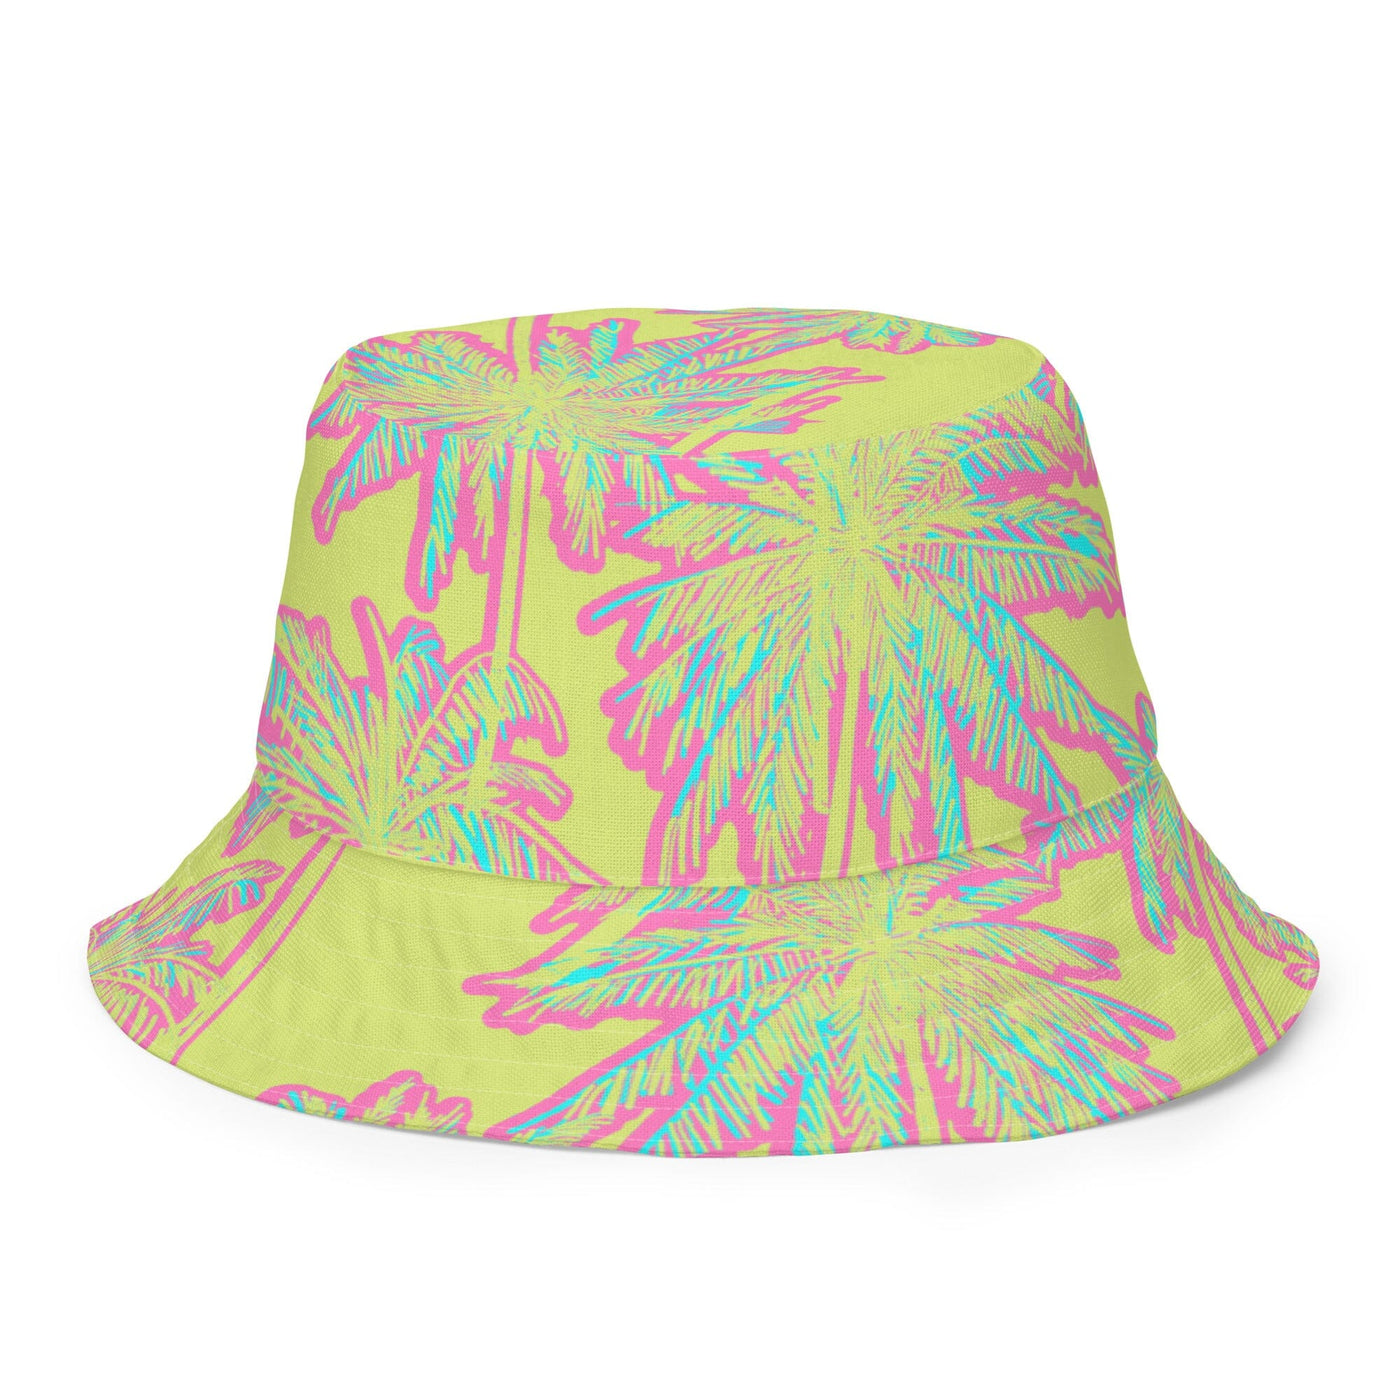 Virgin Islands Bucket Hat - Coastal Cool - Swimwear and Beachwear - Recycled fabrics